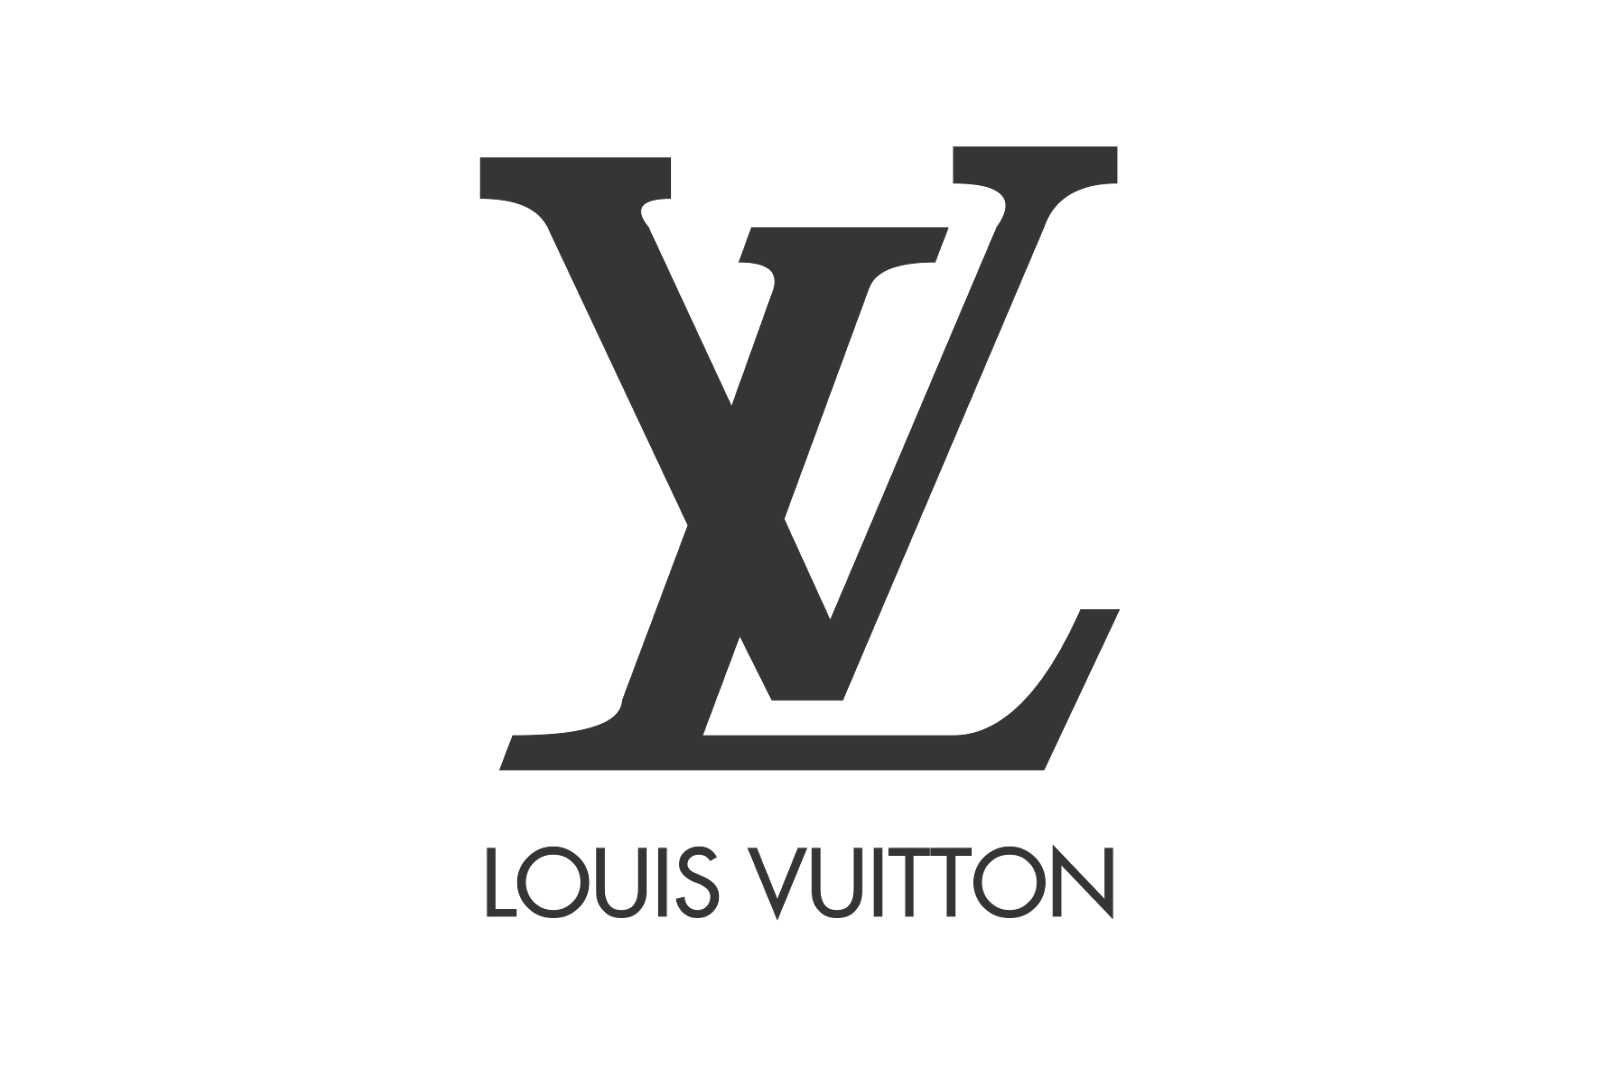 Louis Vuitton Wallpaper - HD Metallic by TeVesMuyNerviosa on DeviantArt